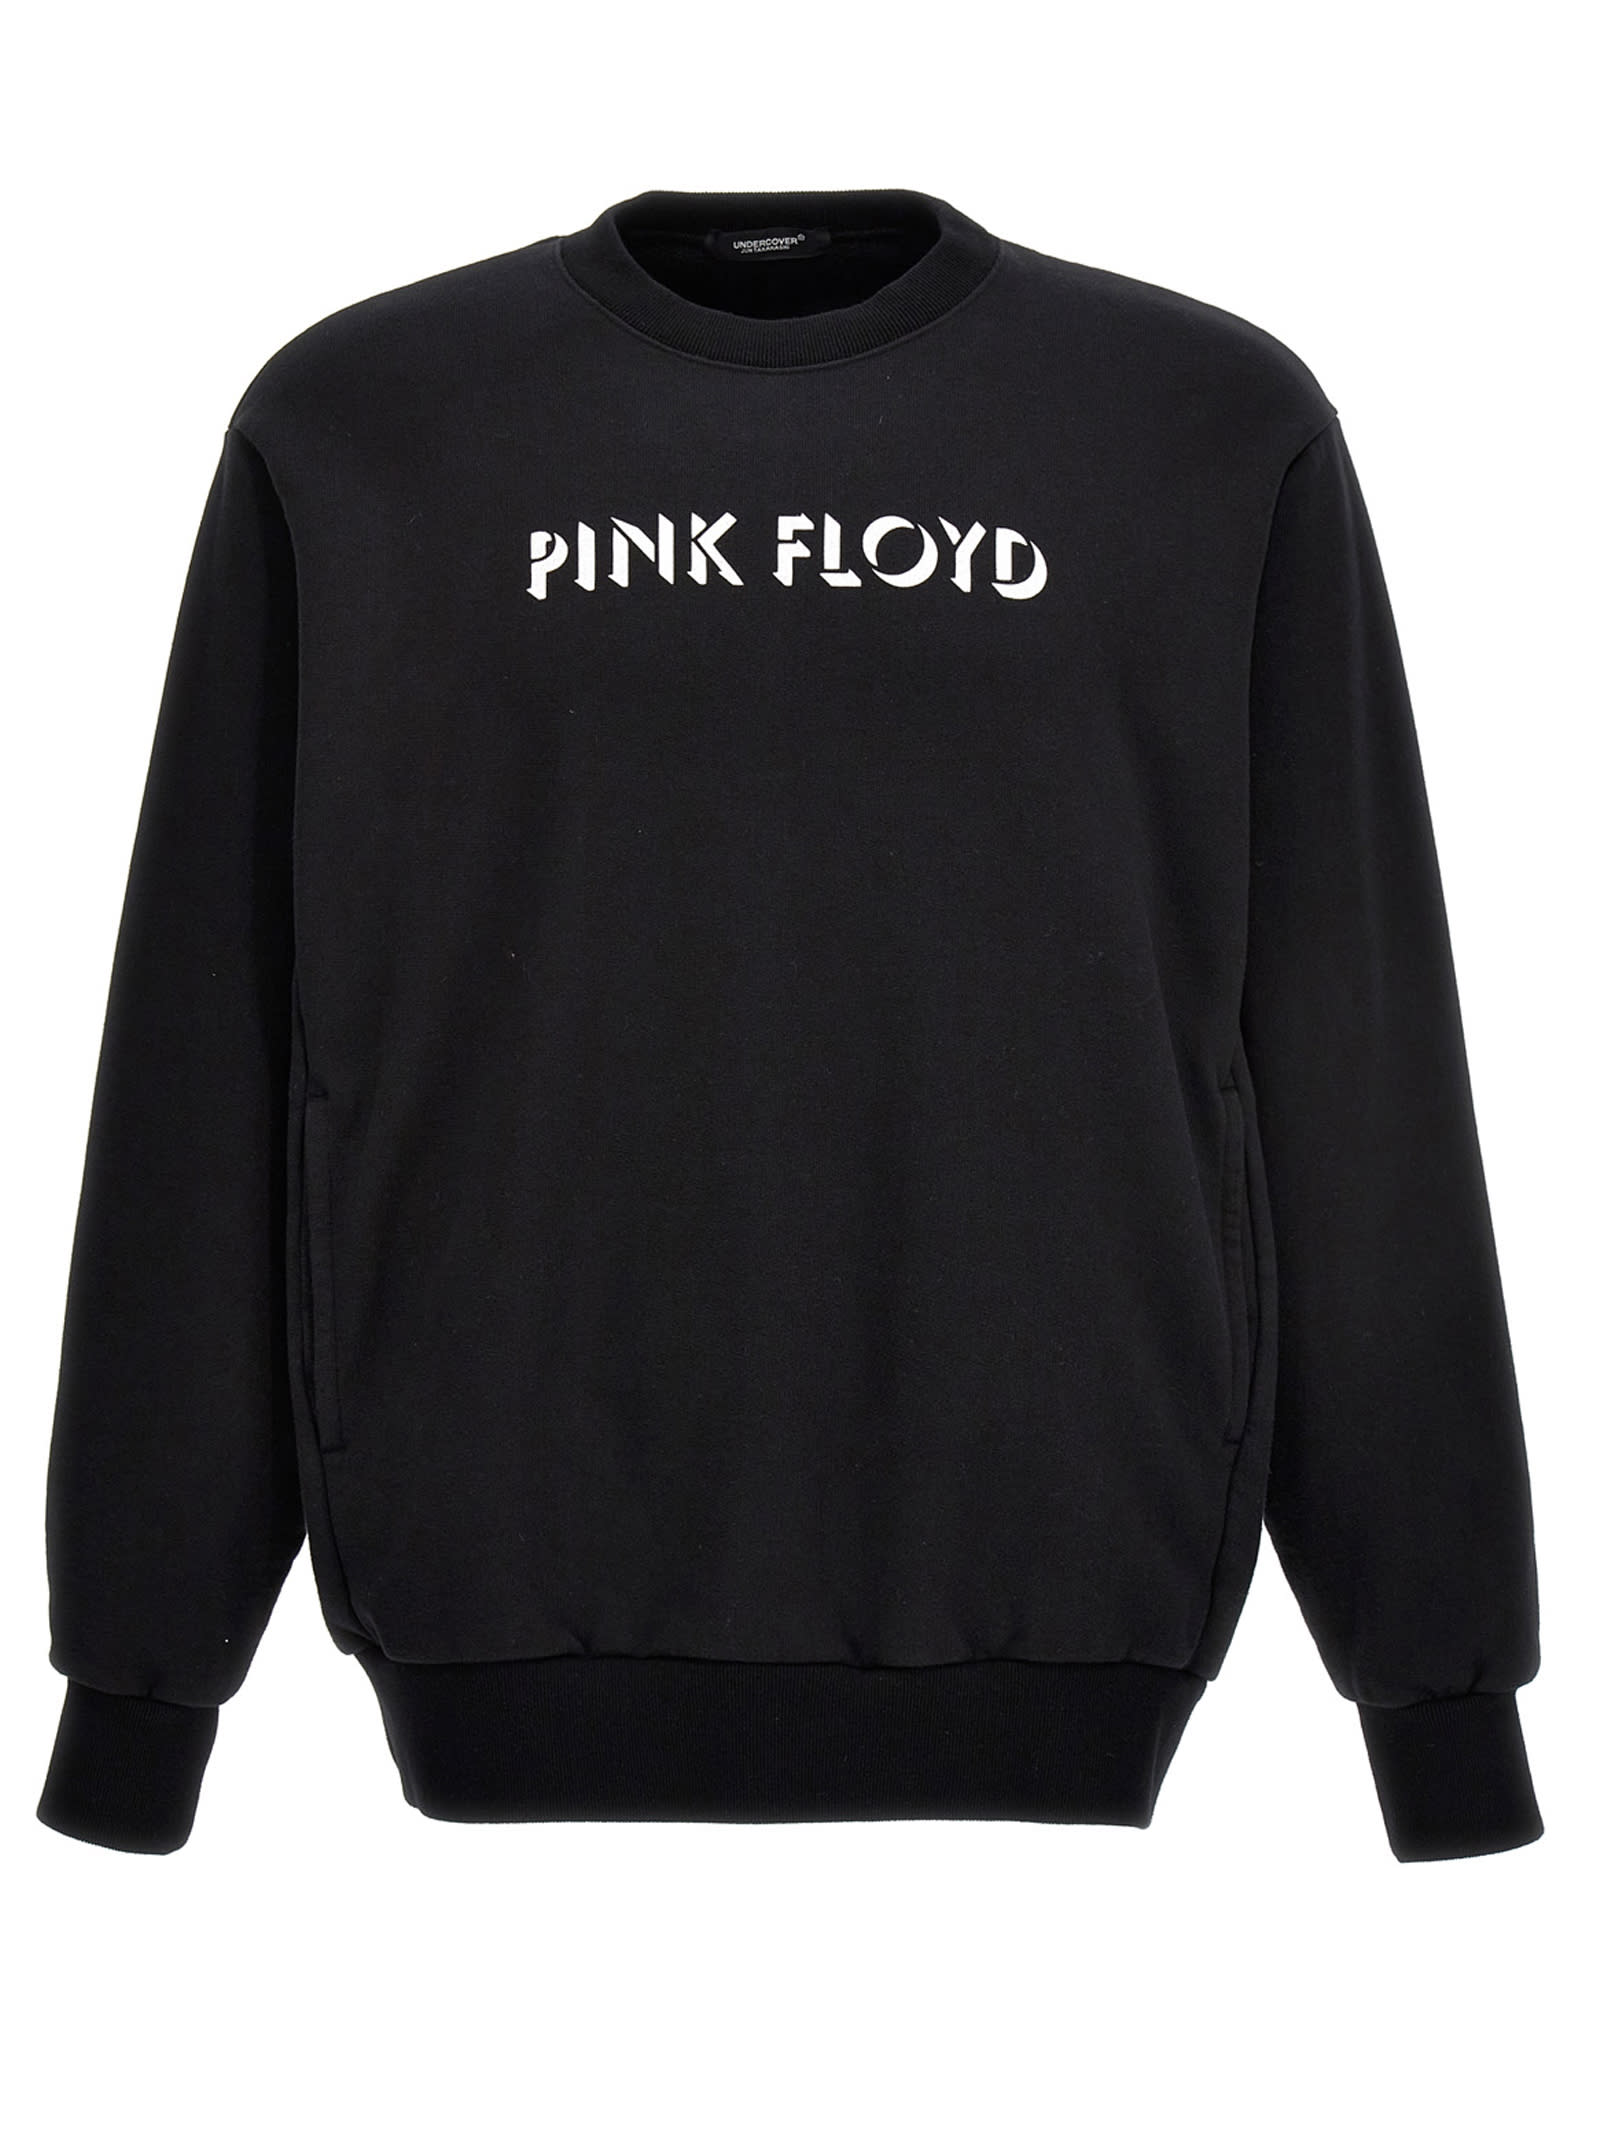 Undercover Jun Takahashi Undercover X Pink Floyd Sweatshirt